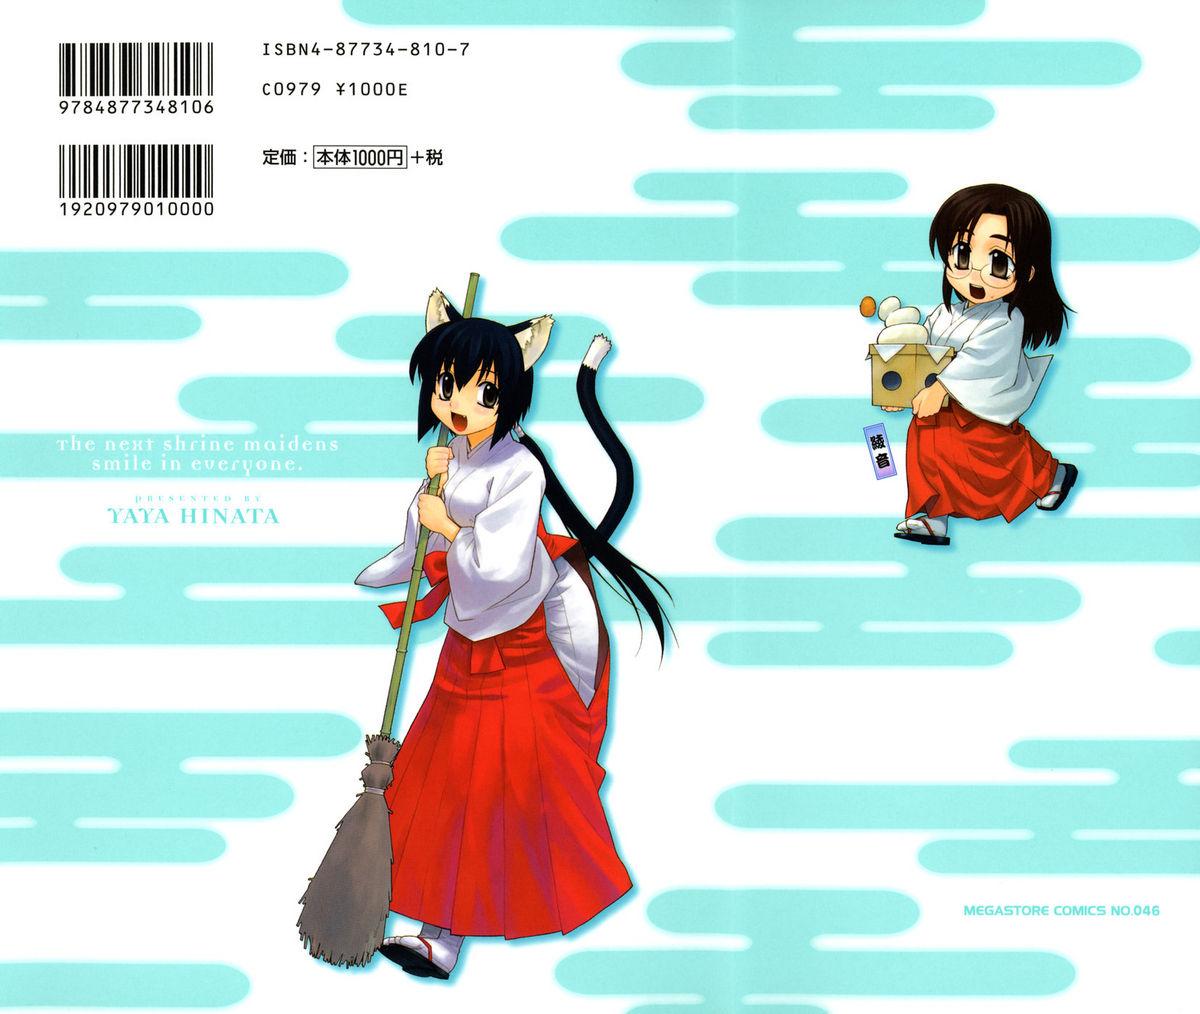 [Yaya Hinata] Tonari no Miko-san wa Minna Warau - The next shrine maidens smile in everyone. 221